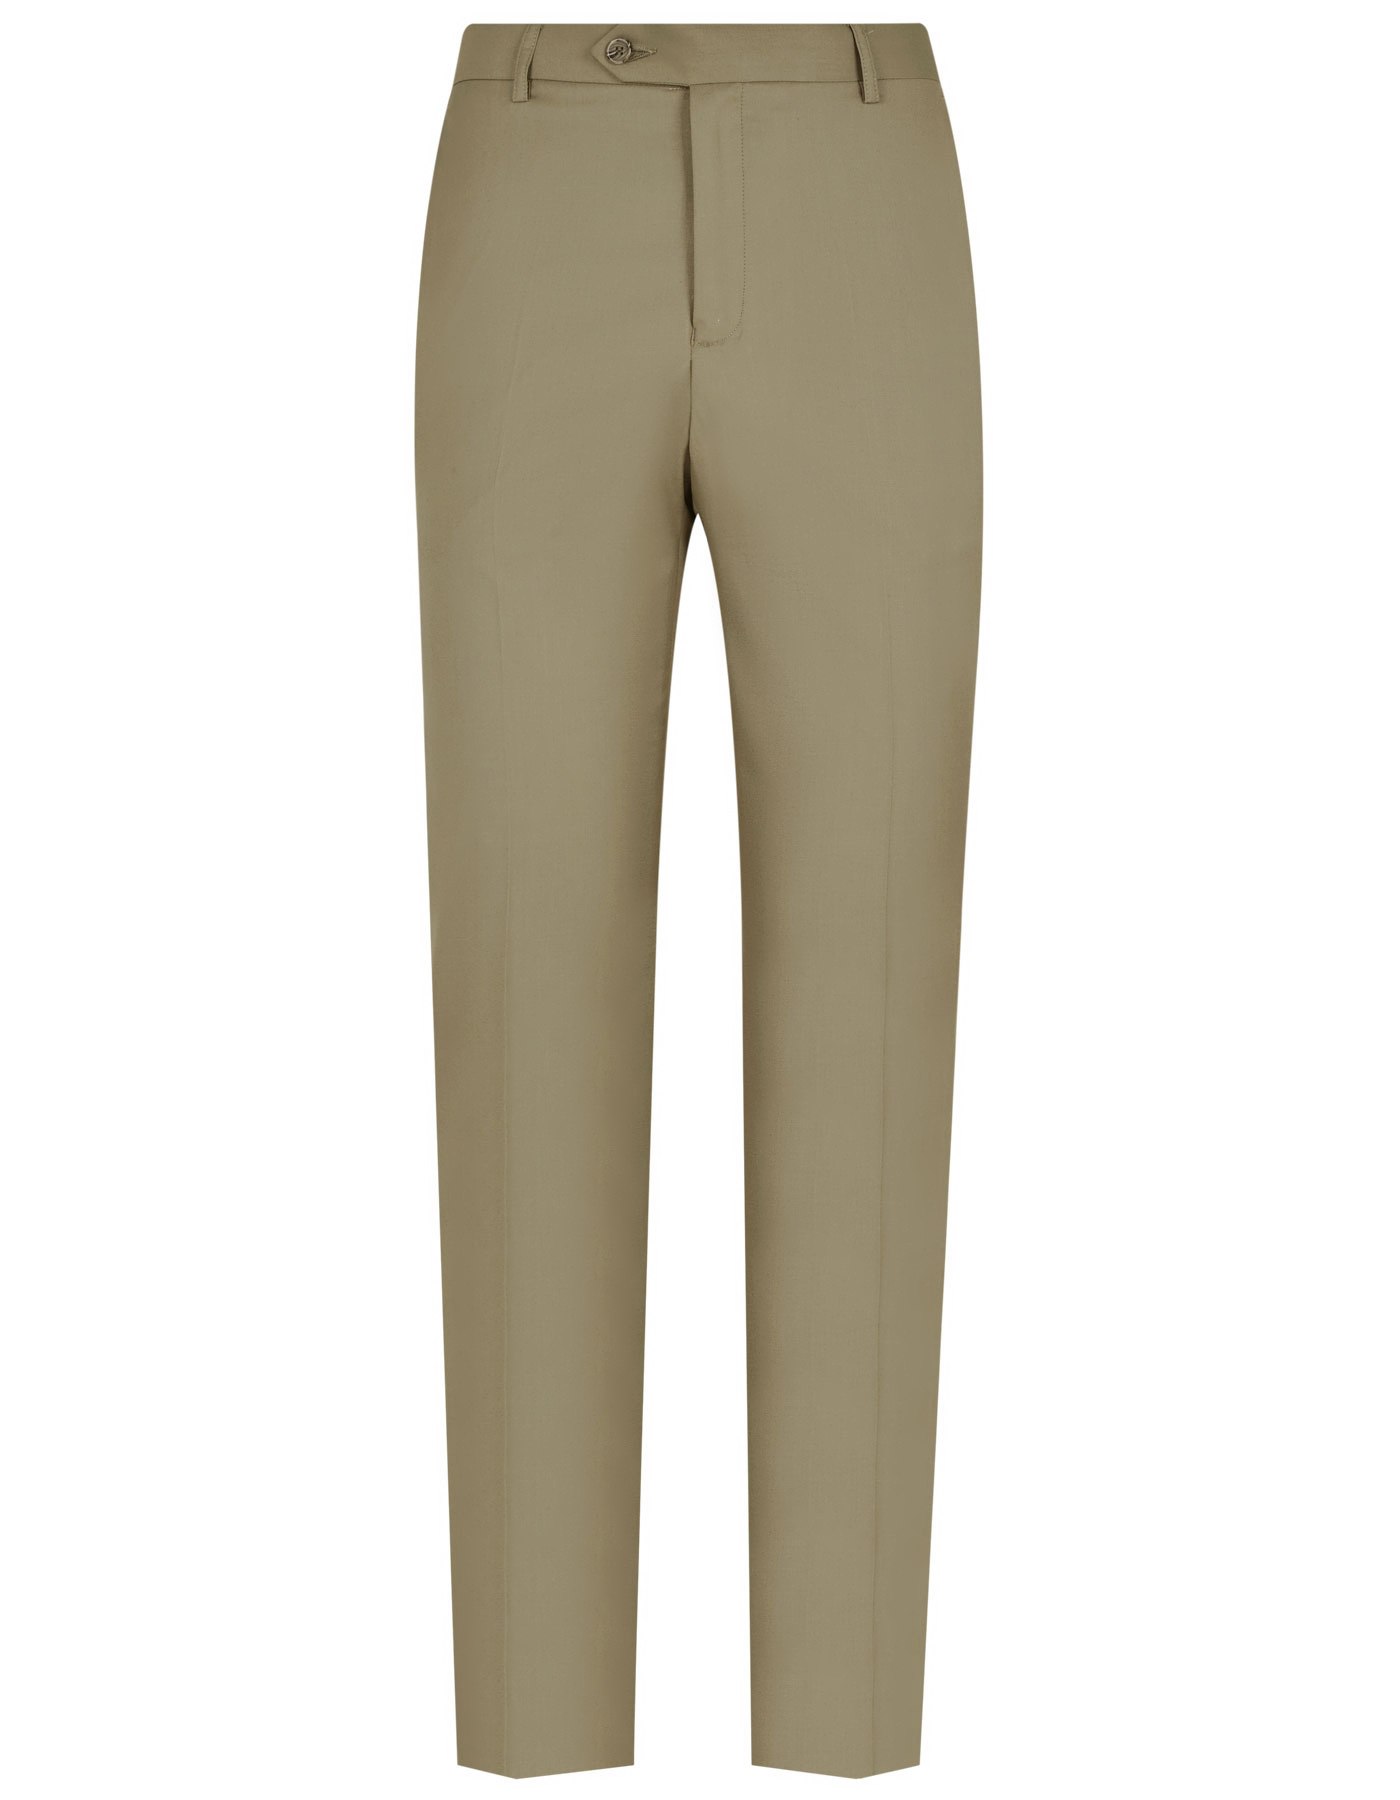 Formal Trouser Khaki 30 FT422-2S Uniworth TF422C